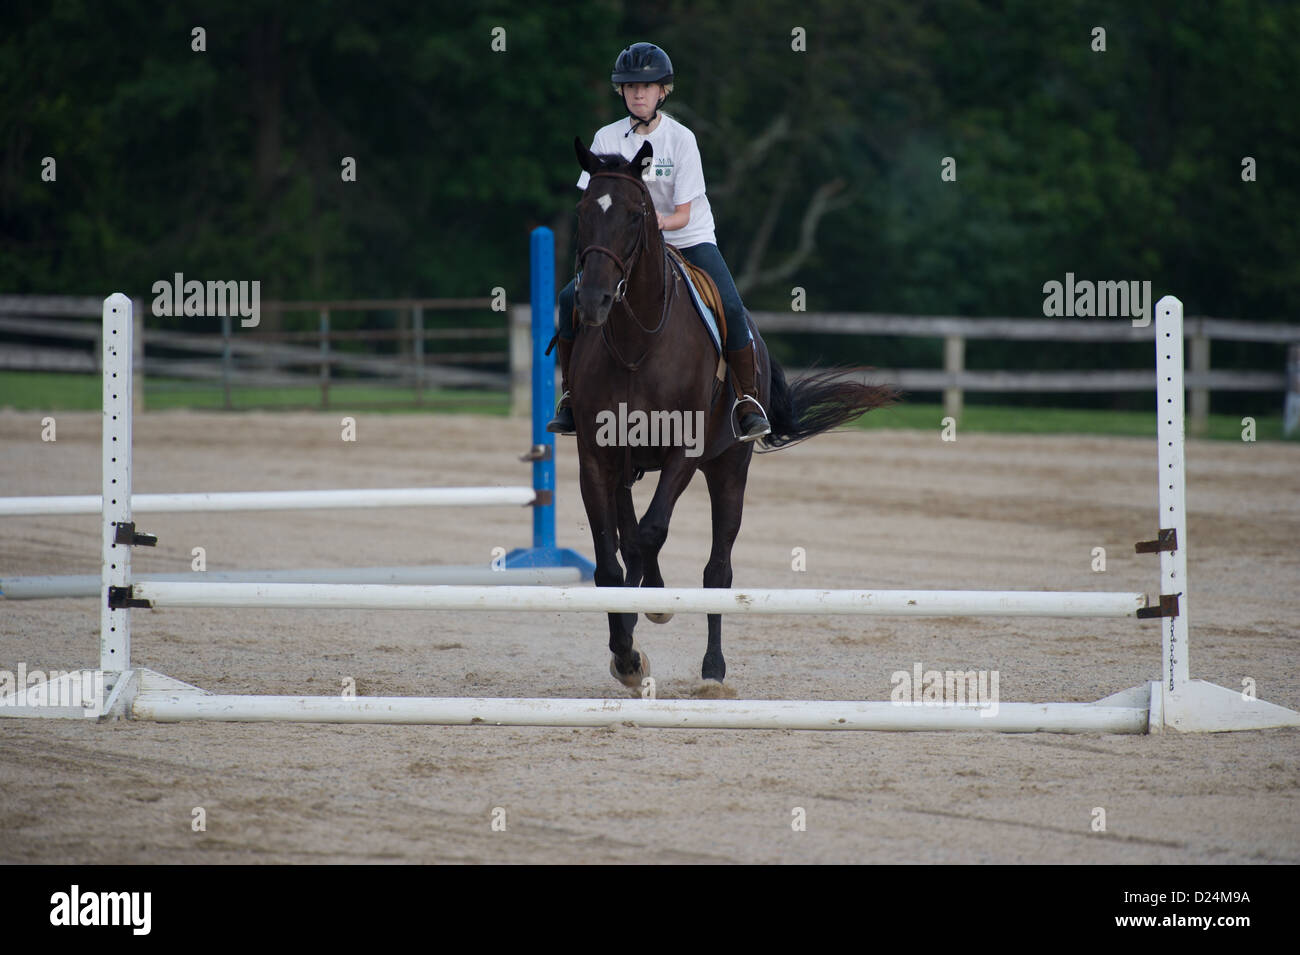 Girl practicing riding a horse through obstacle course Stock Photo